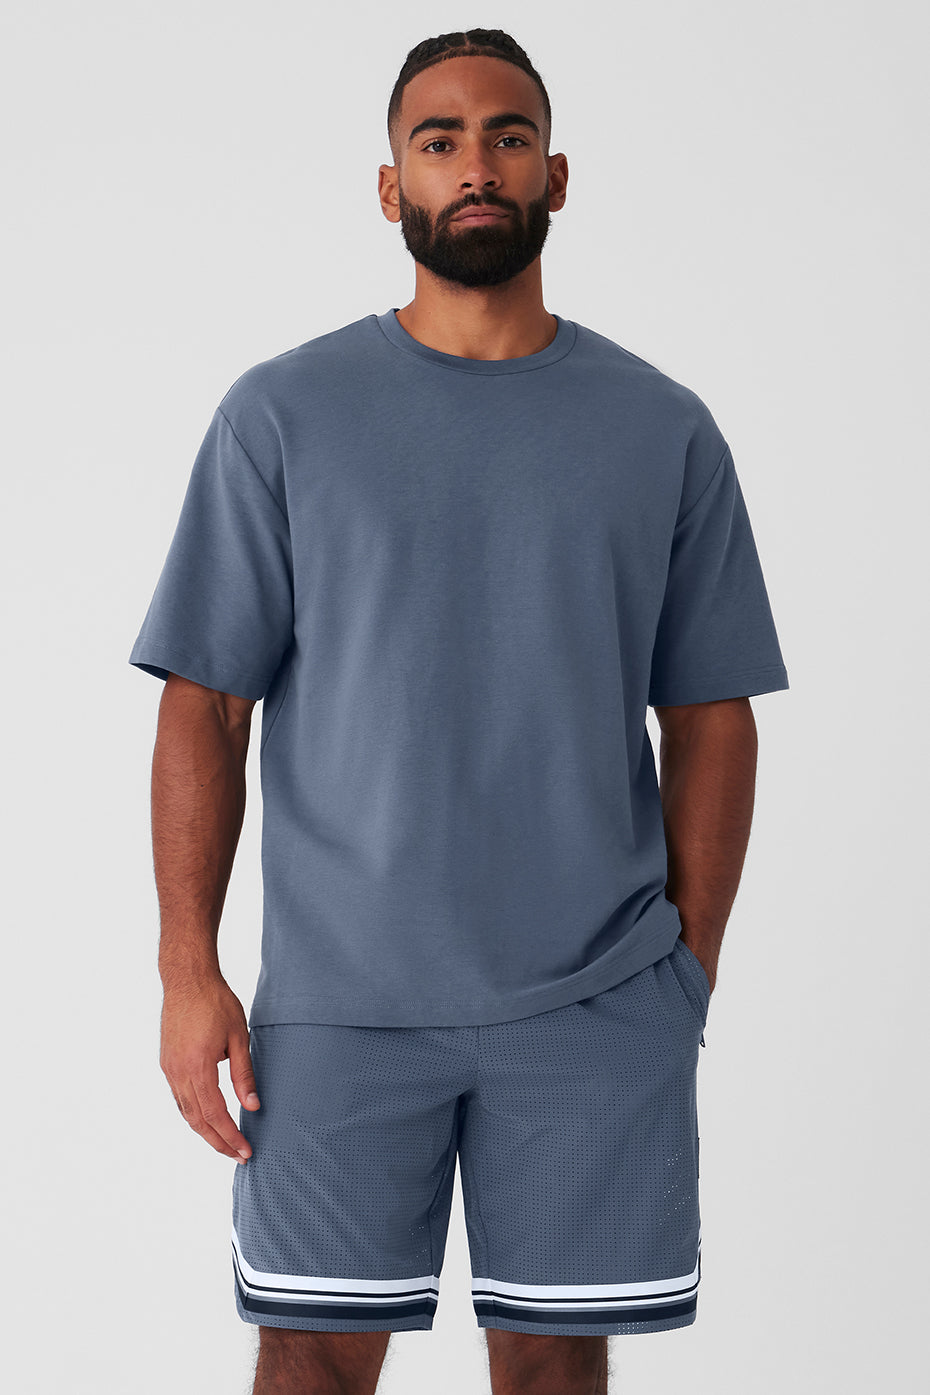 Alo Yoga Blue Accolade Sweatshirt In Calm Blue | ModeSens